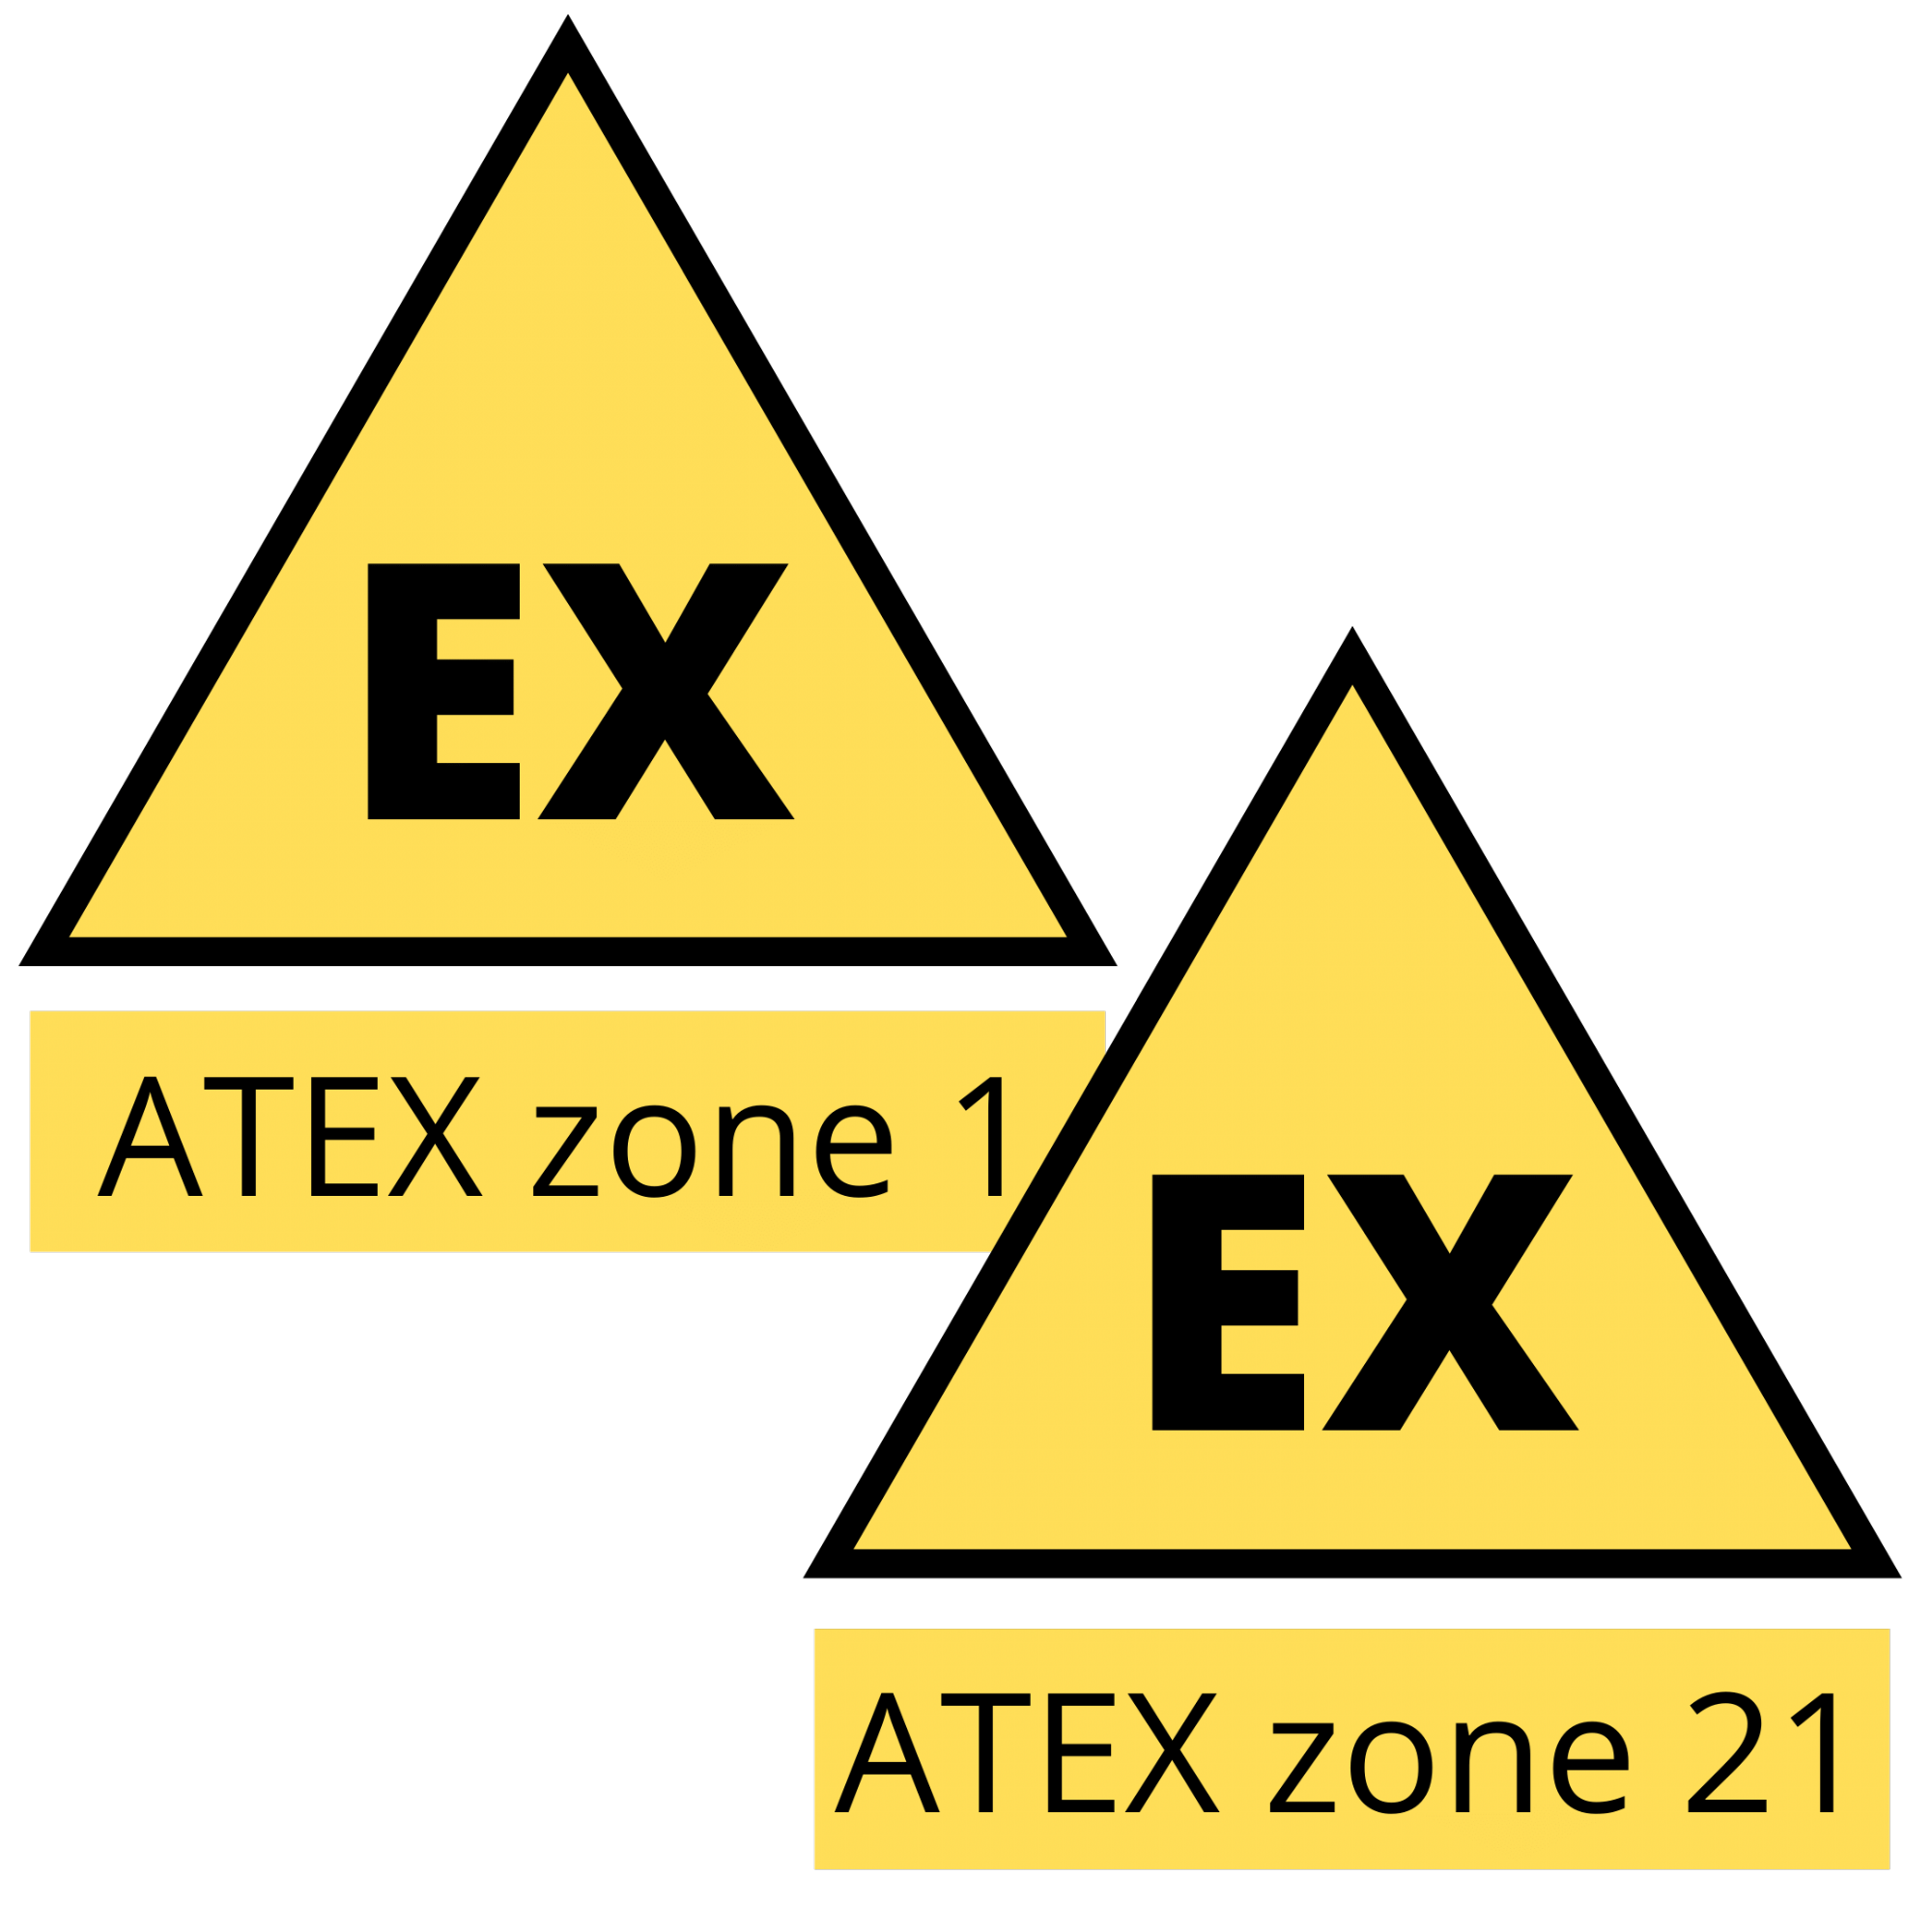 ATEX vibration monitors for zone 1 and zone 21